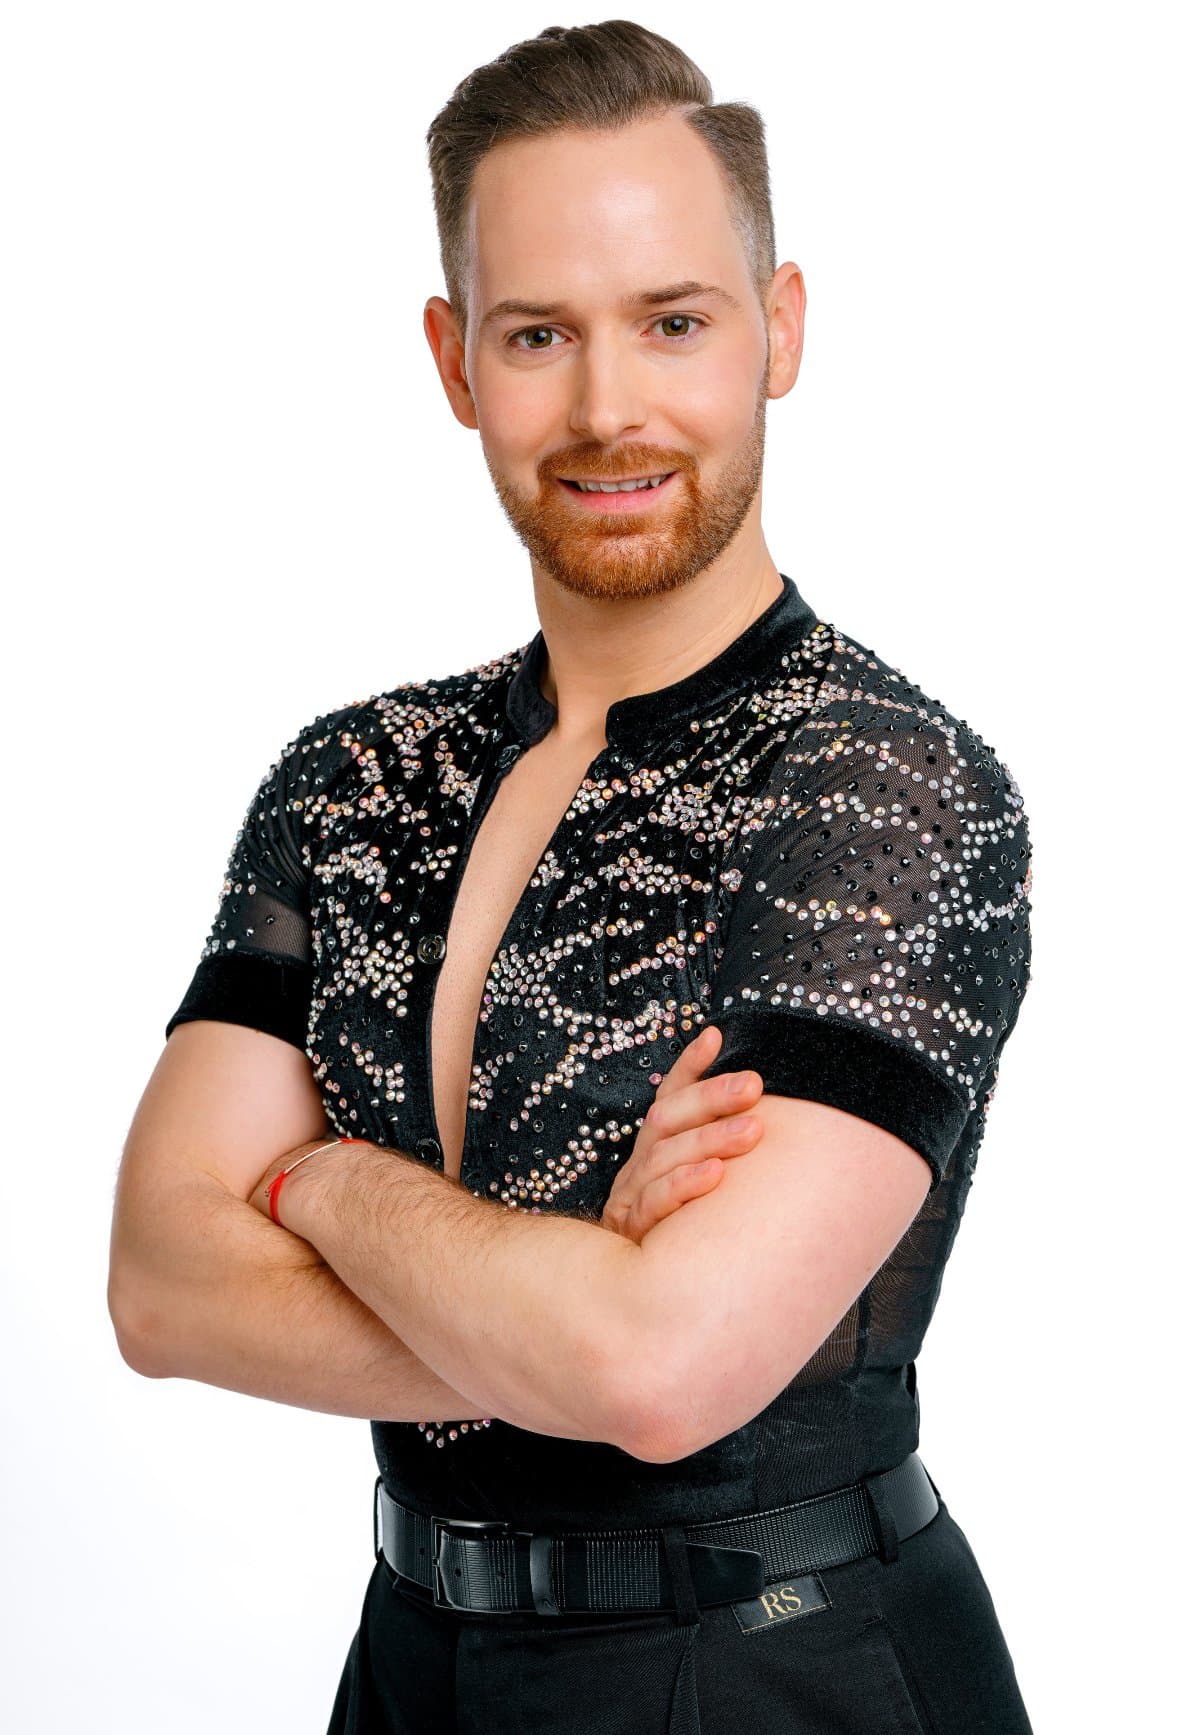 Florian Vana - Profitänzer bei den Dancing Stars 2019